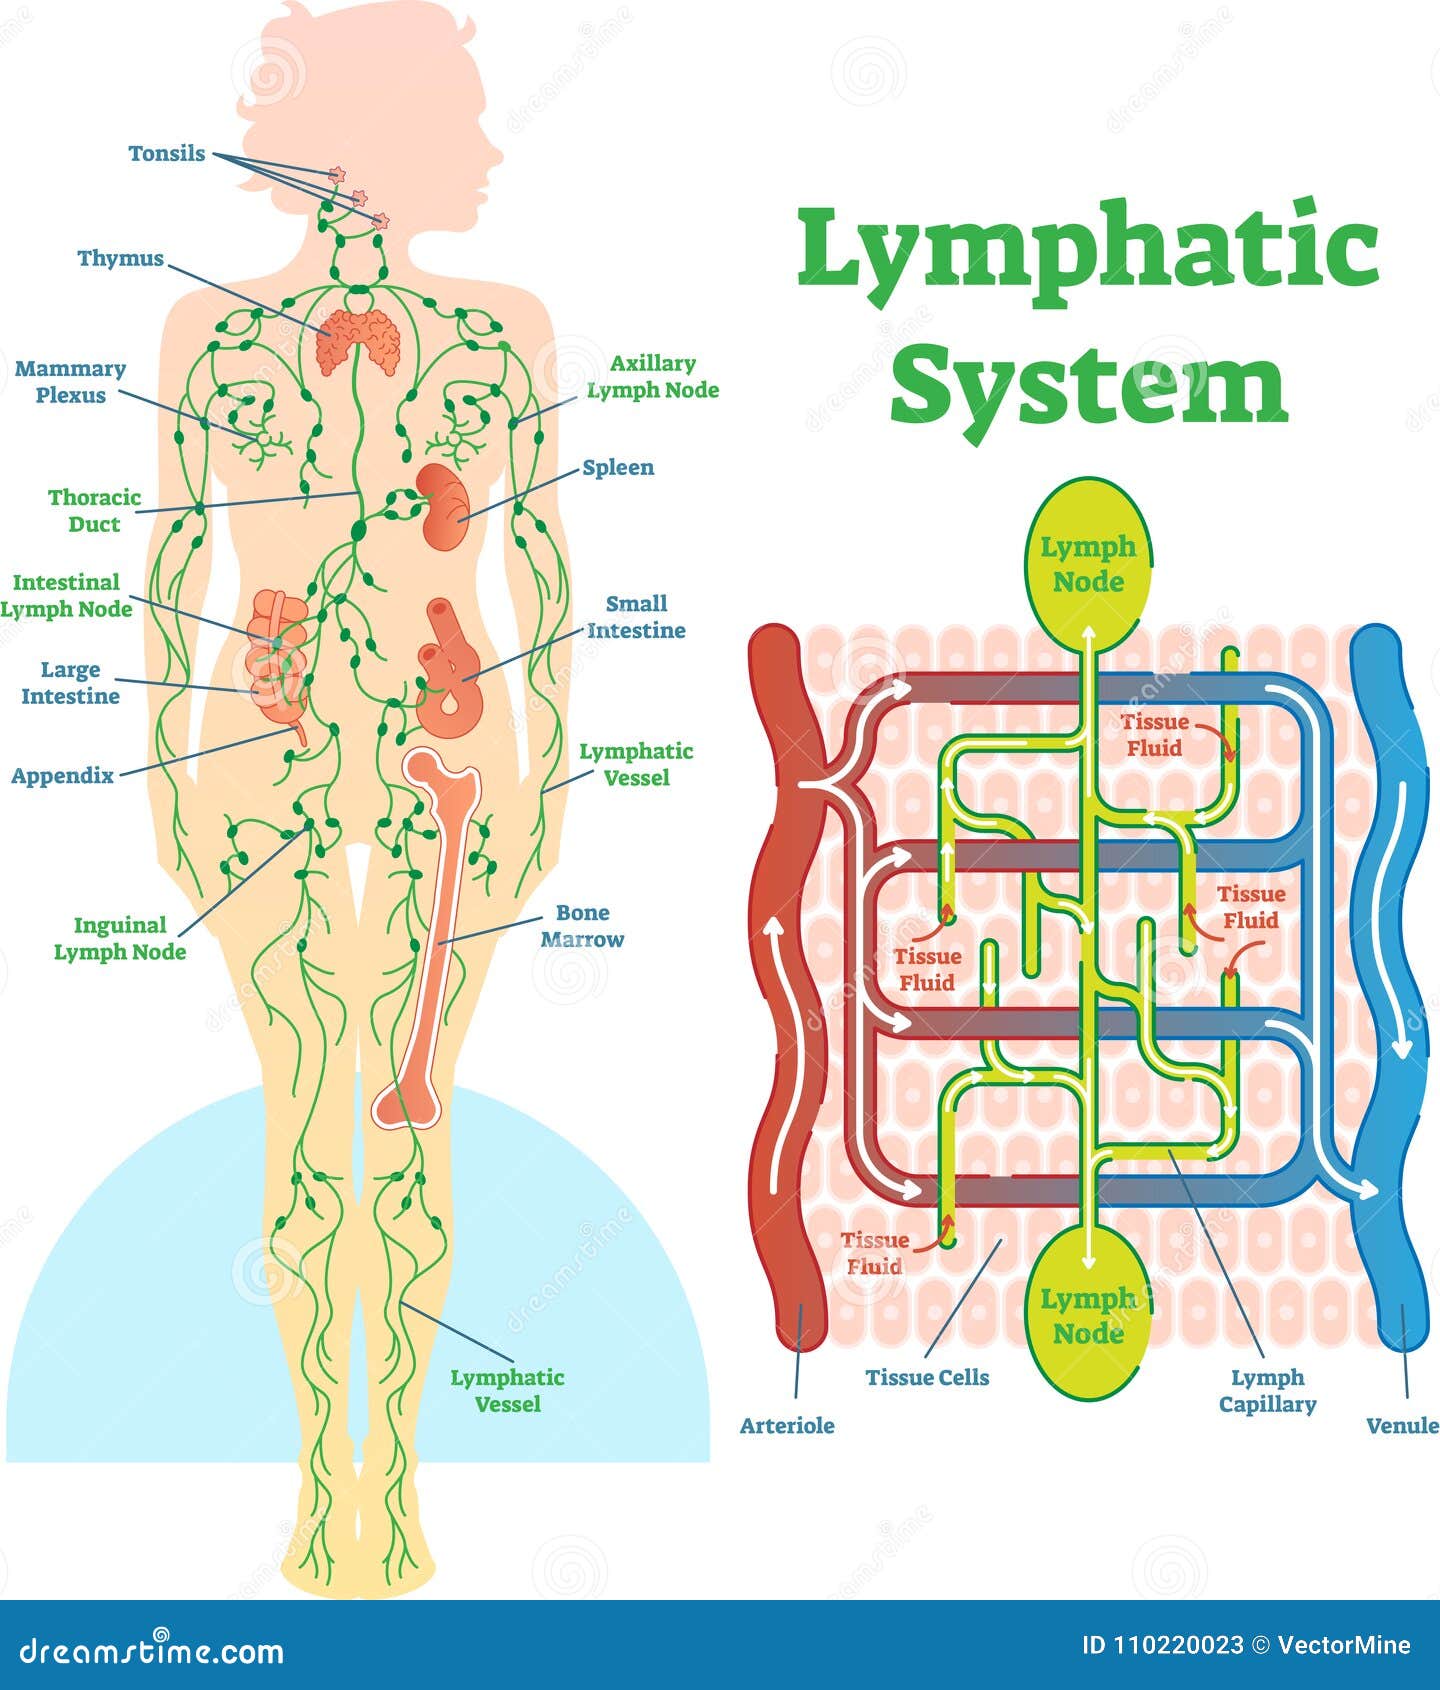 lymphatic system anatomical   diagram, educational medical scheme.